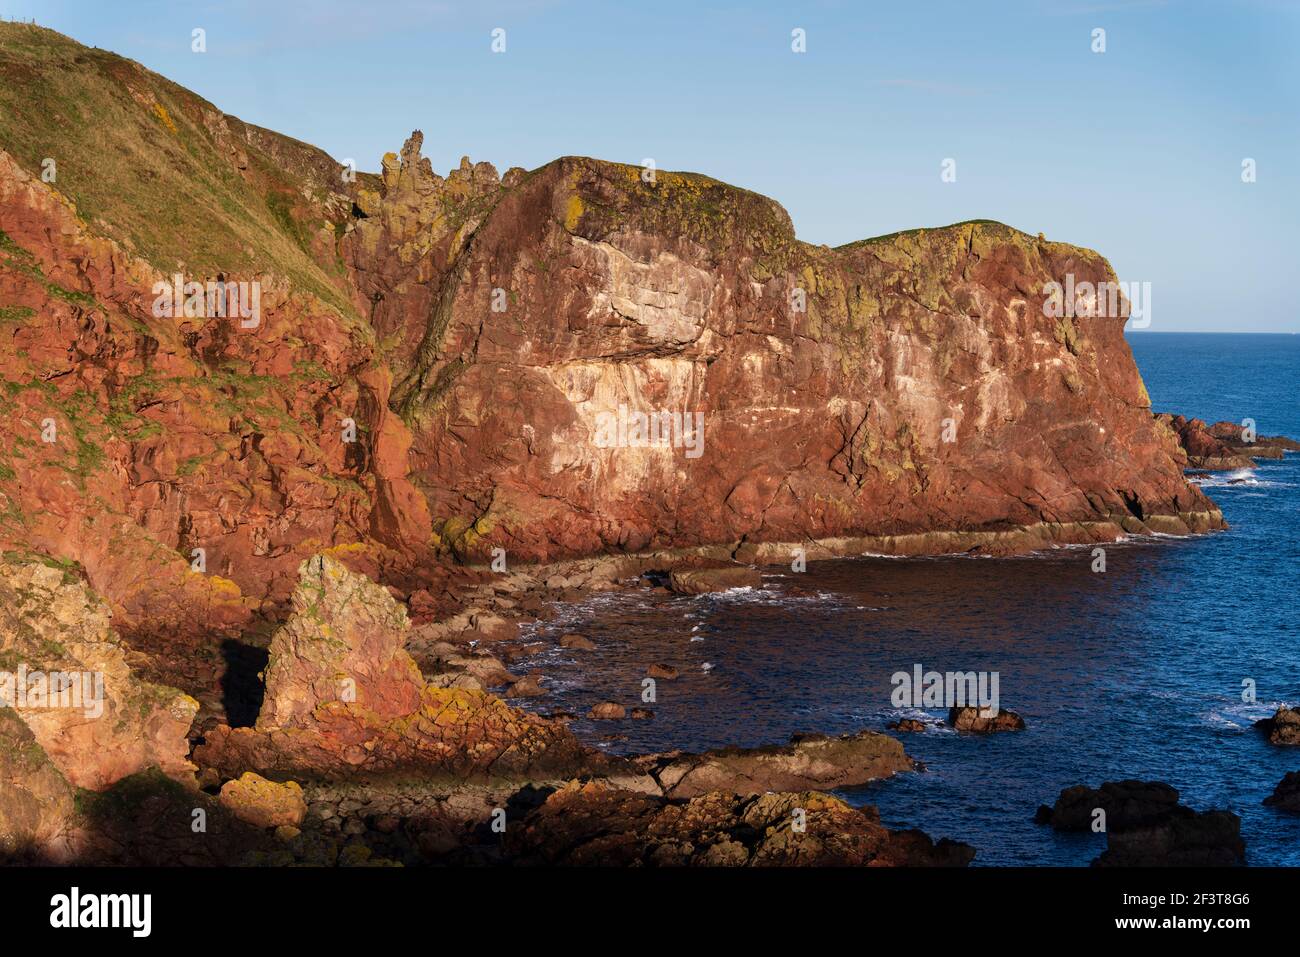 St Abbs, Berwickshire, Scotland - North Sea fishing village and nature reserve. Sandstone red rock cliffs. Stock Photo